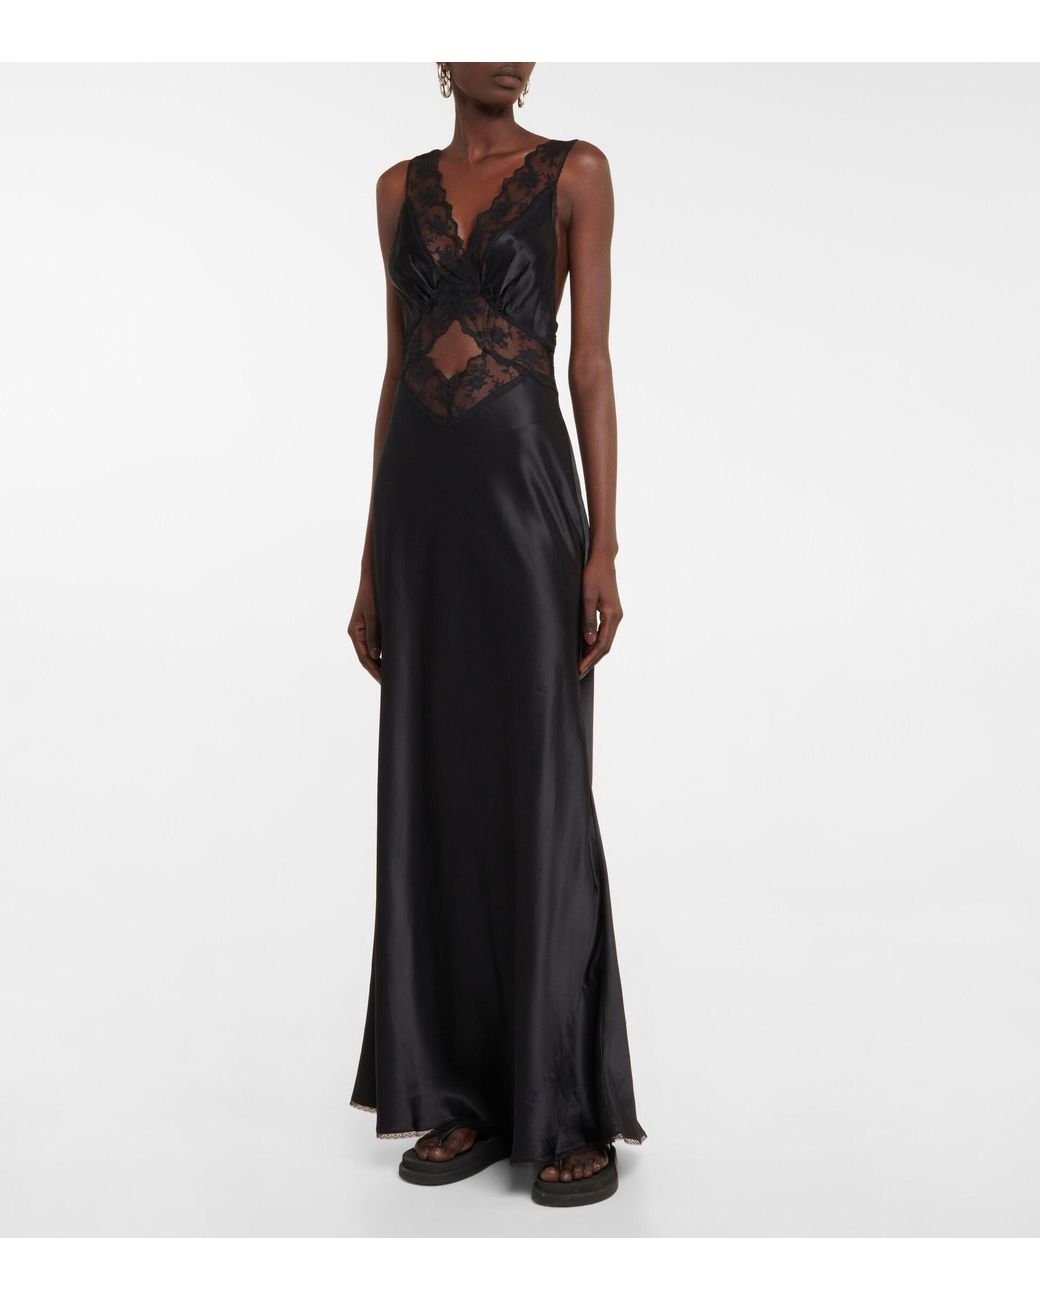 Simple V Neck Black Satin Short Prom Dress, Black Homecoming Dress, Bl –  abcprom